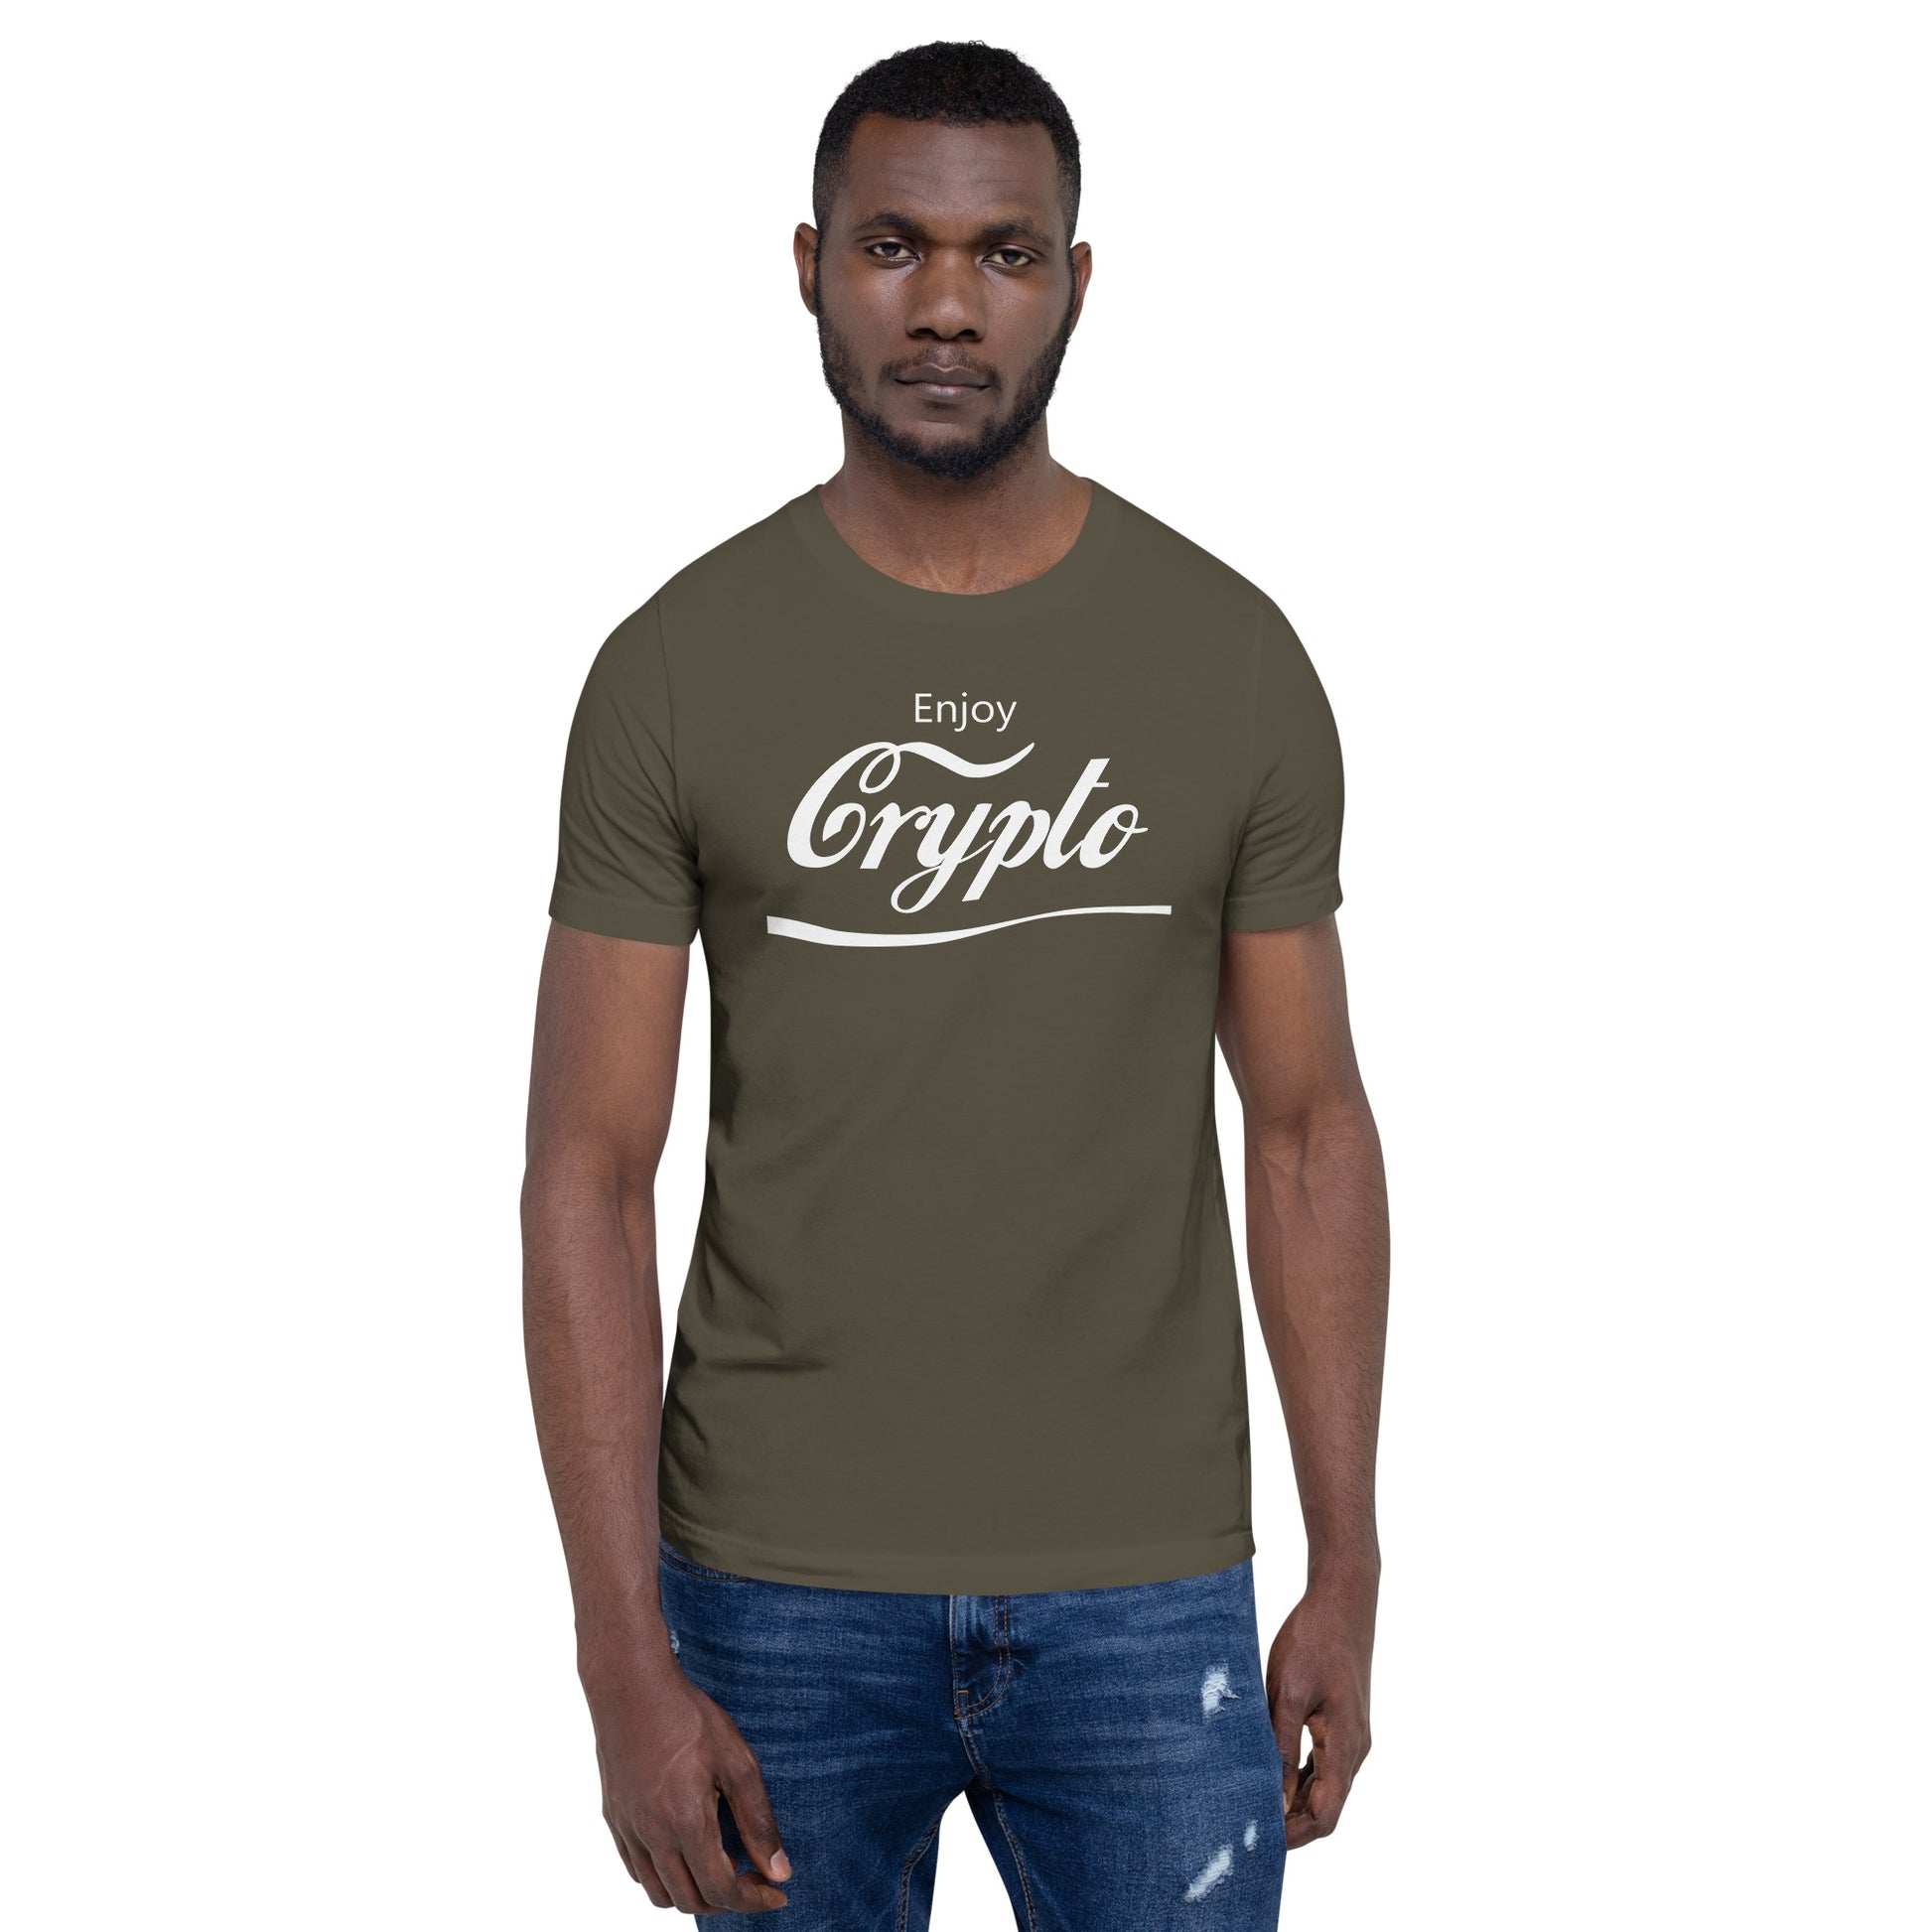 Enjoy Crypto | Shirts & Tops | enjoy-crypto-tee | printful